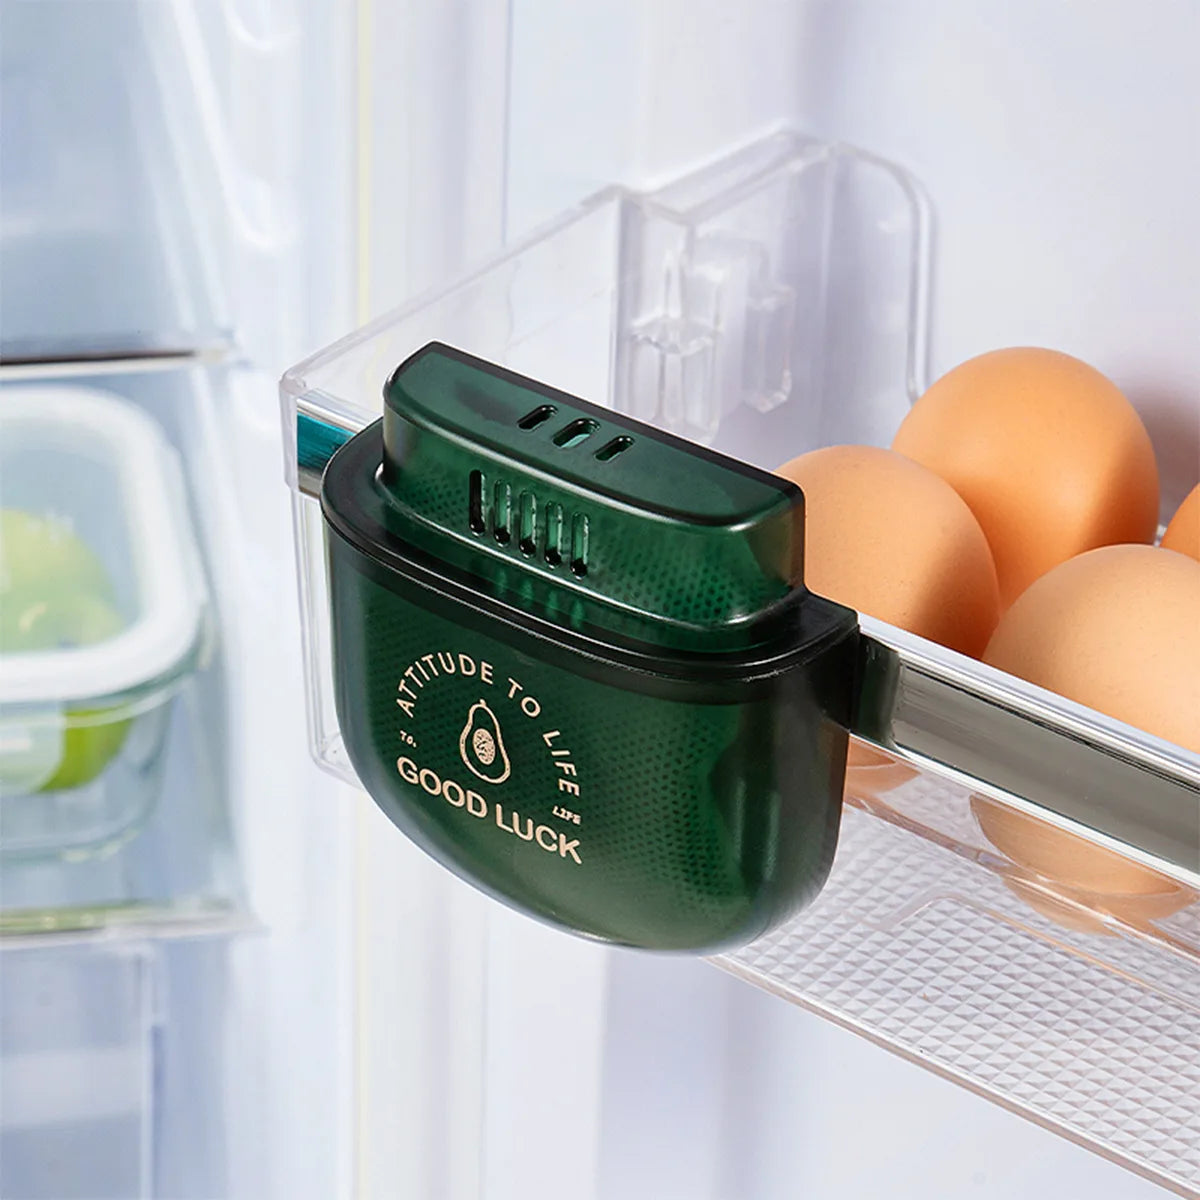 Refrigerator Wardrobe Deodorant Air Freshener Household Anti-Odor Charcoal Bag Deodorant Box, White